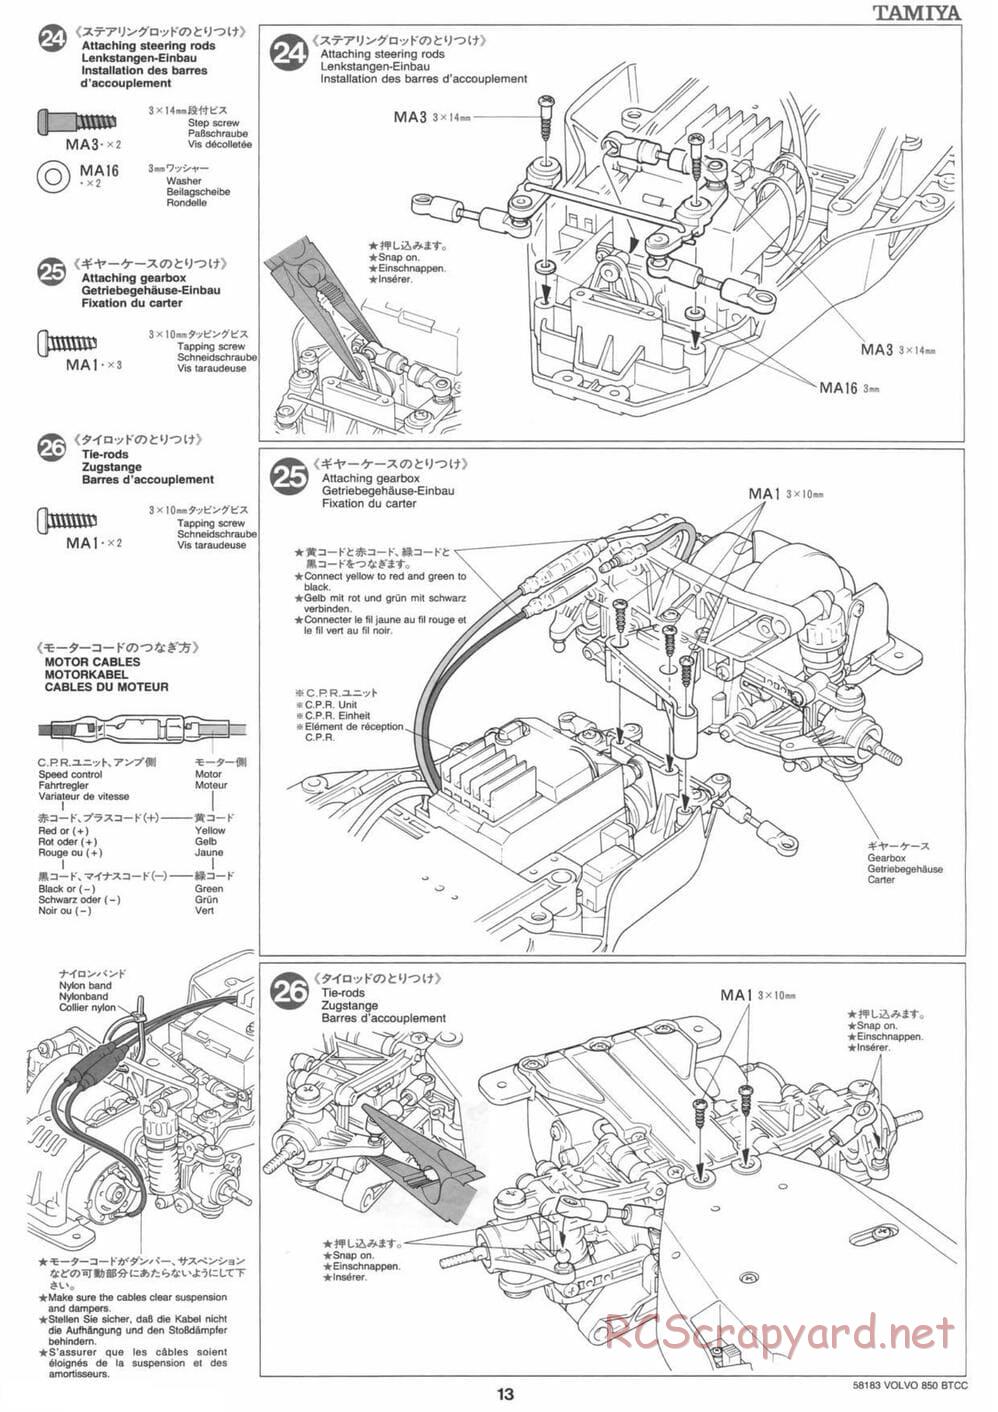 Tamiya - Volvo 850 BTCC - FF-01 Chassis - Manual - Page 13